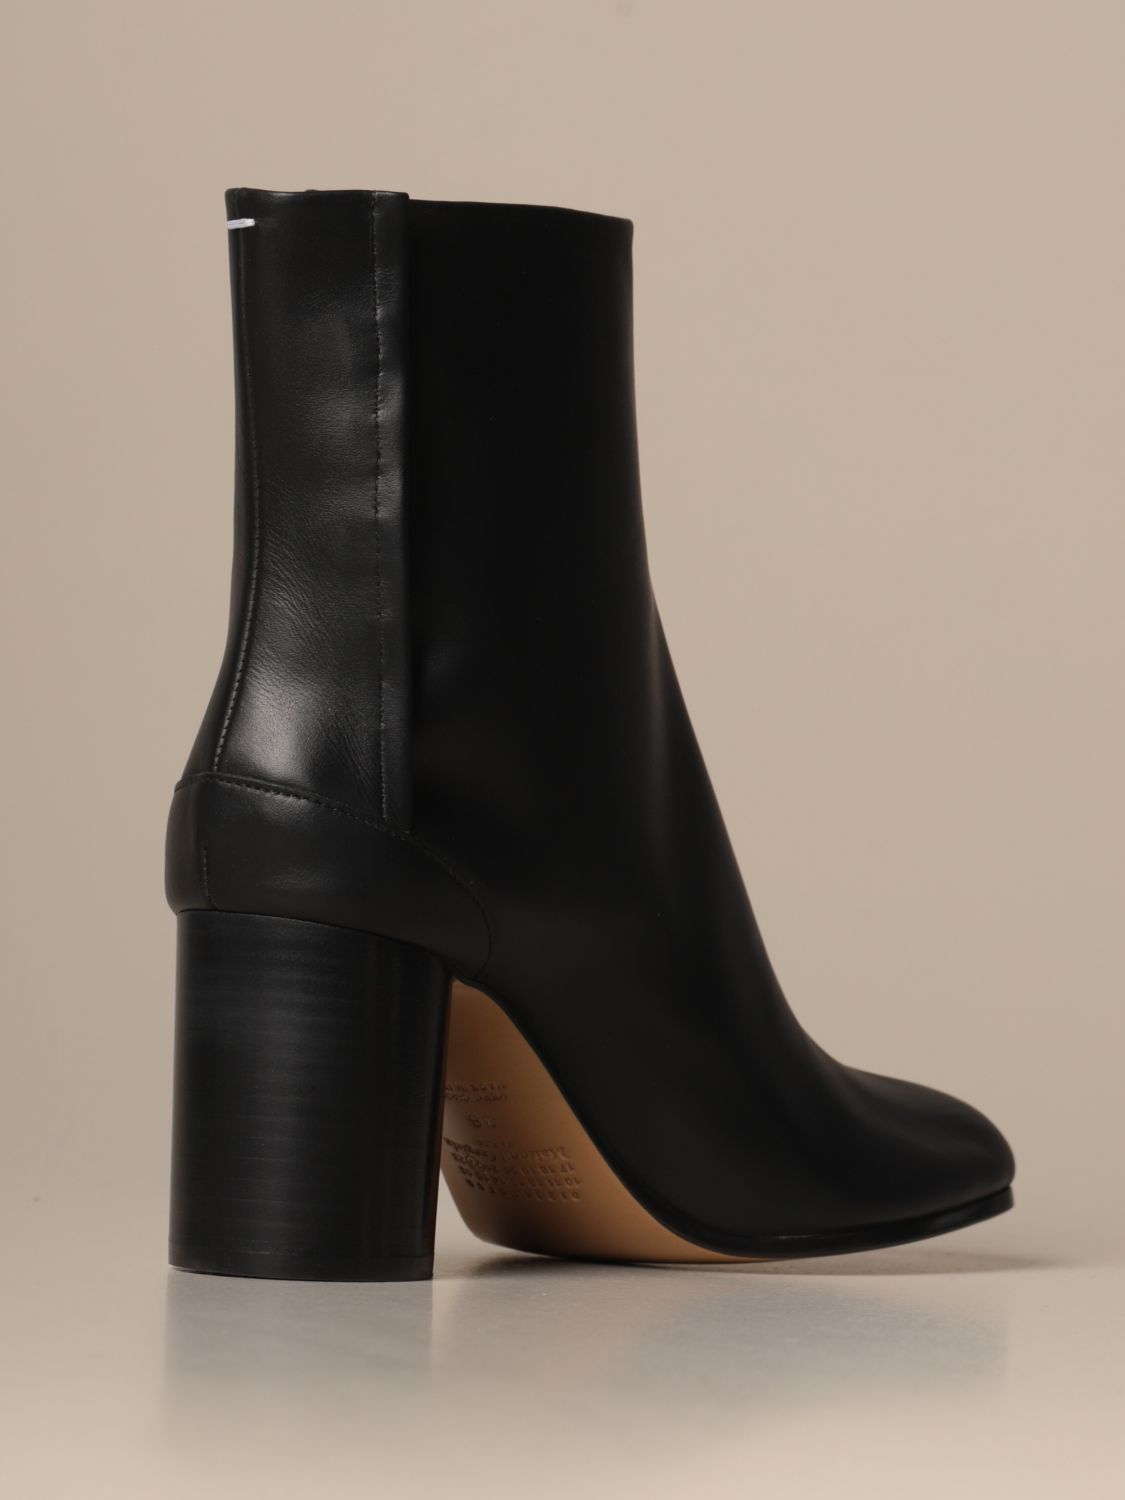 MAISON MARGIELA: Tabi split leather ankle boot | Flat Booties Maison